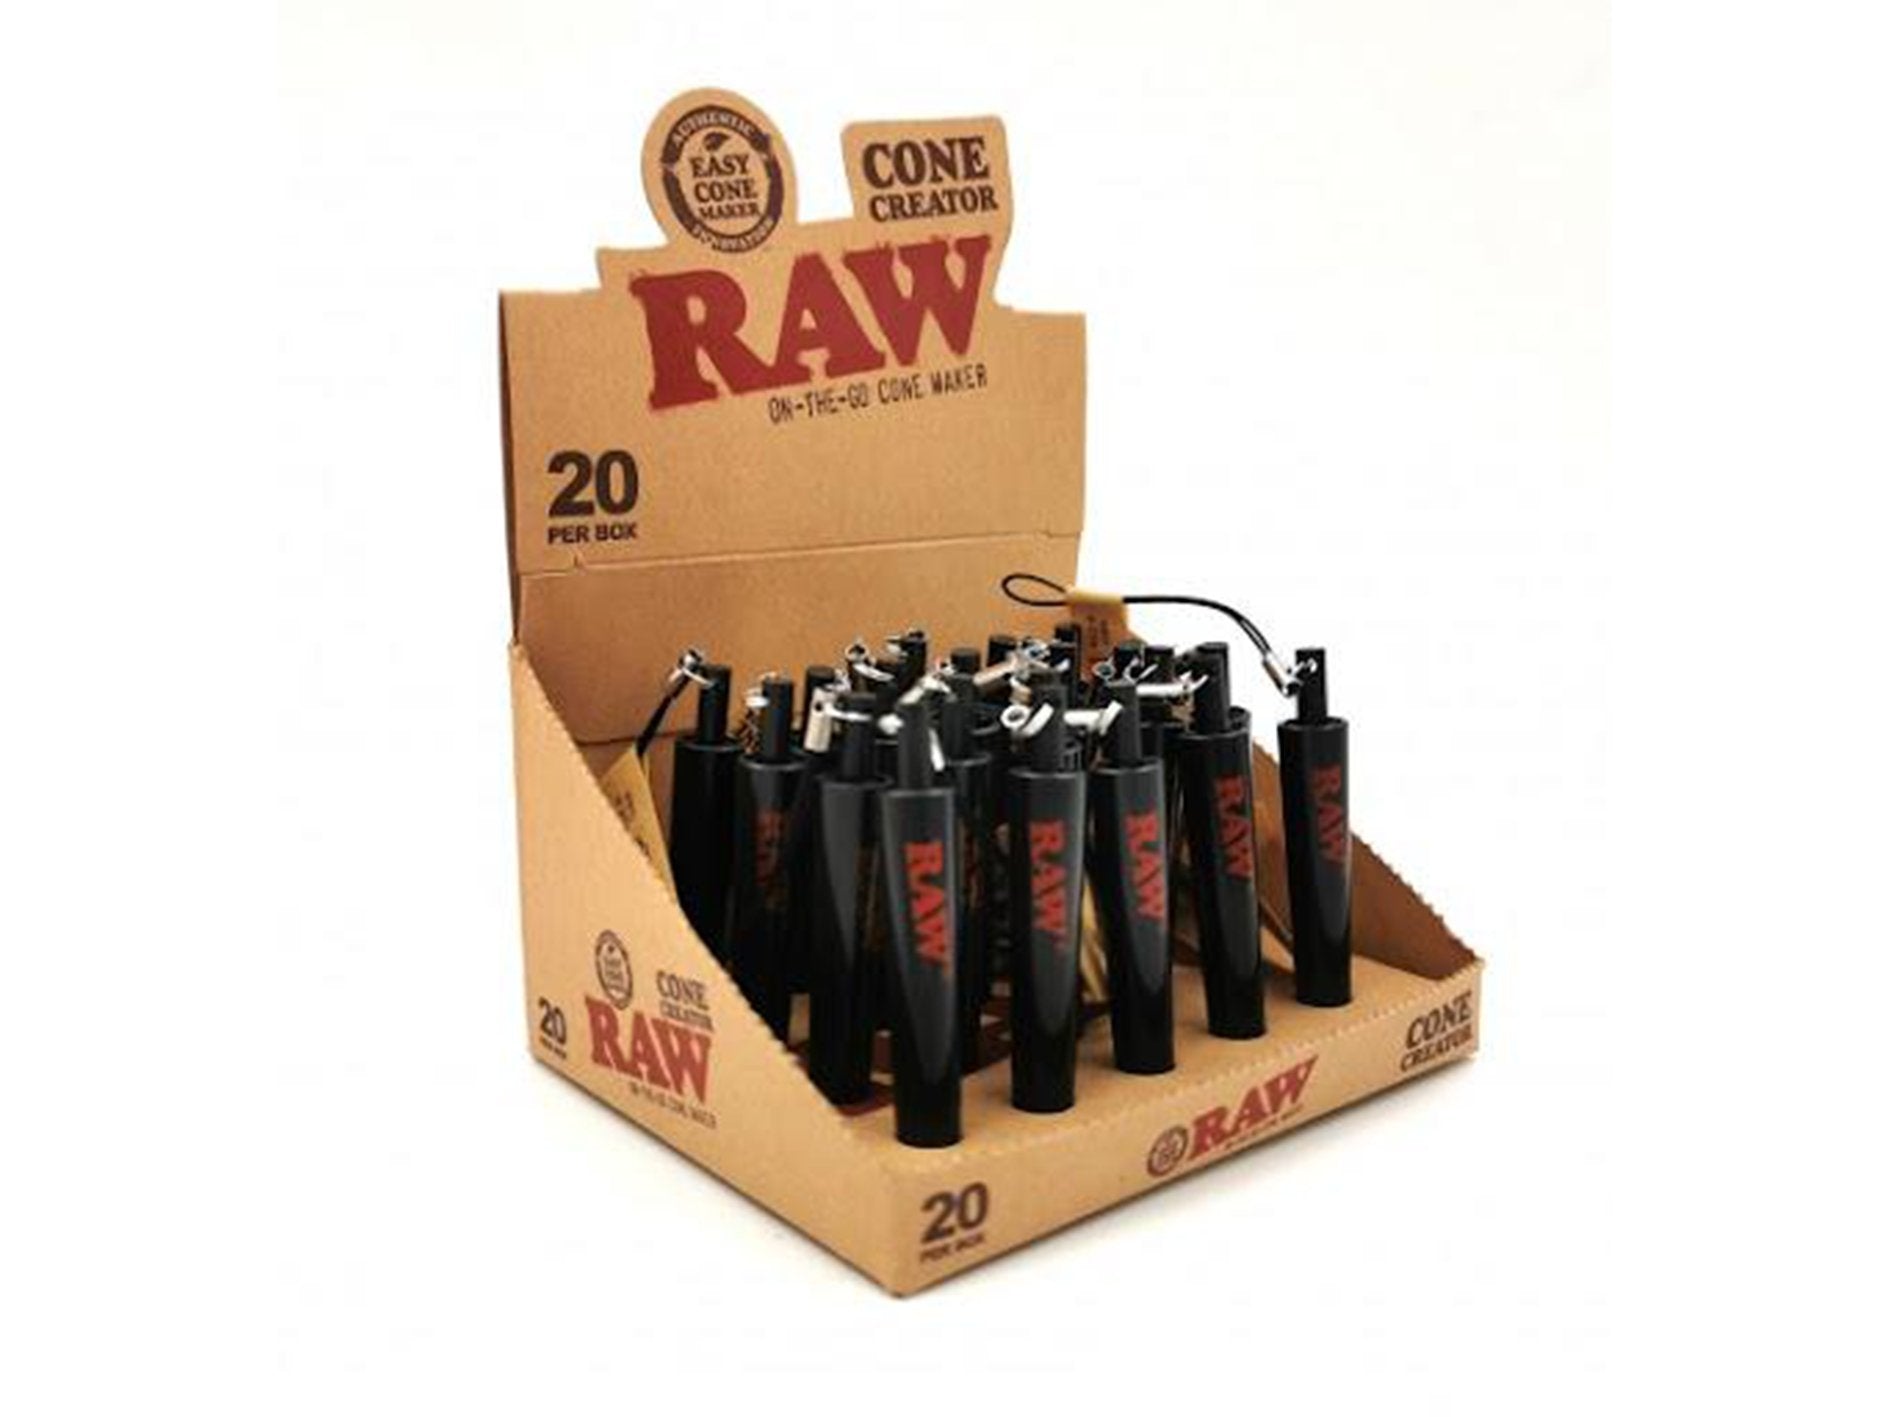 RAW Cone Creator - VIR Wholesale